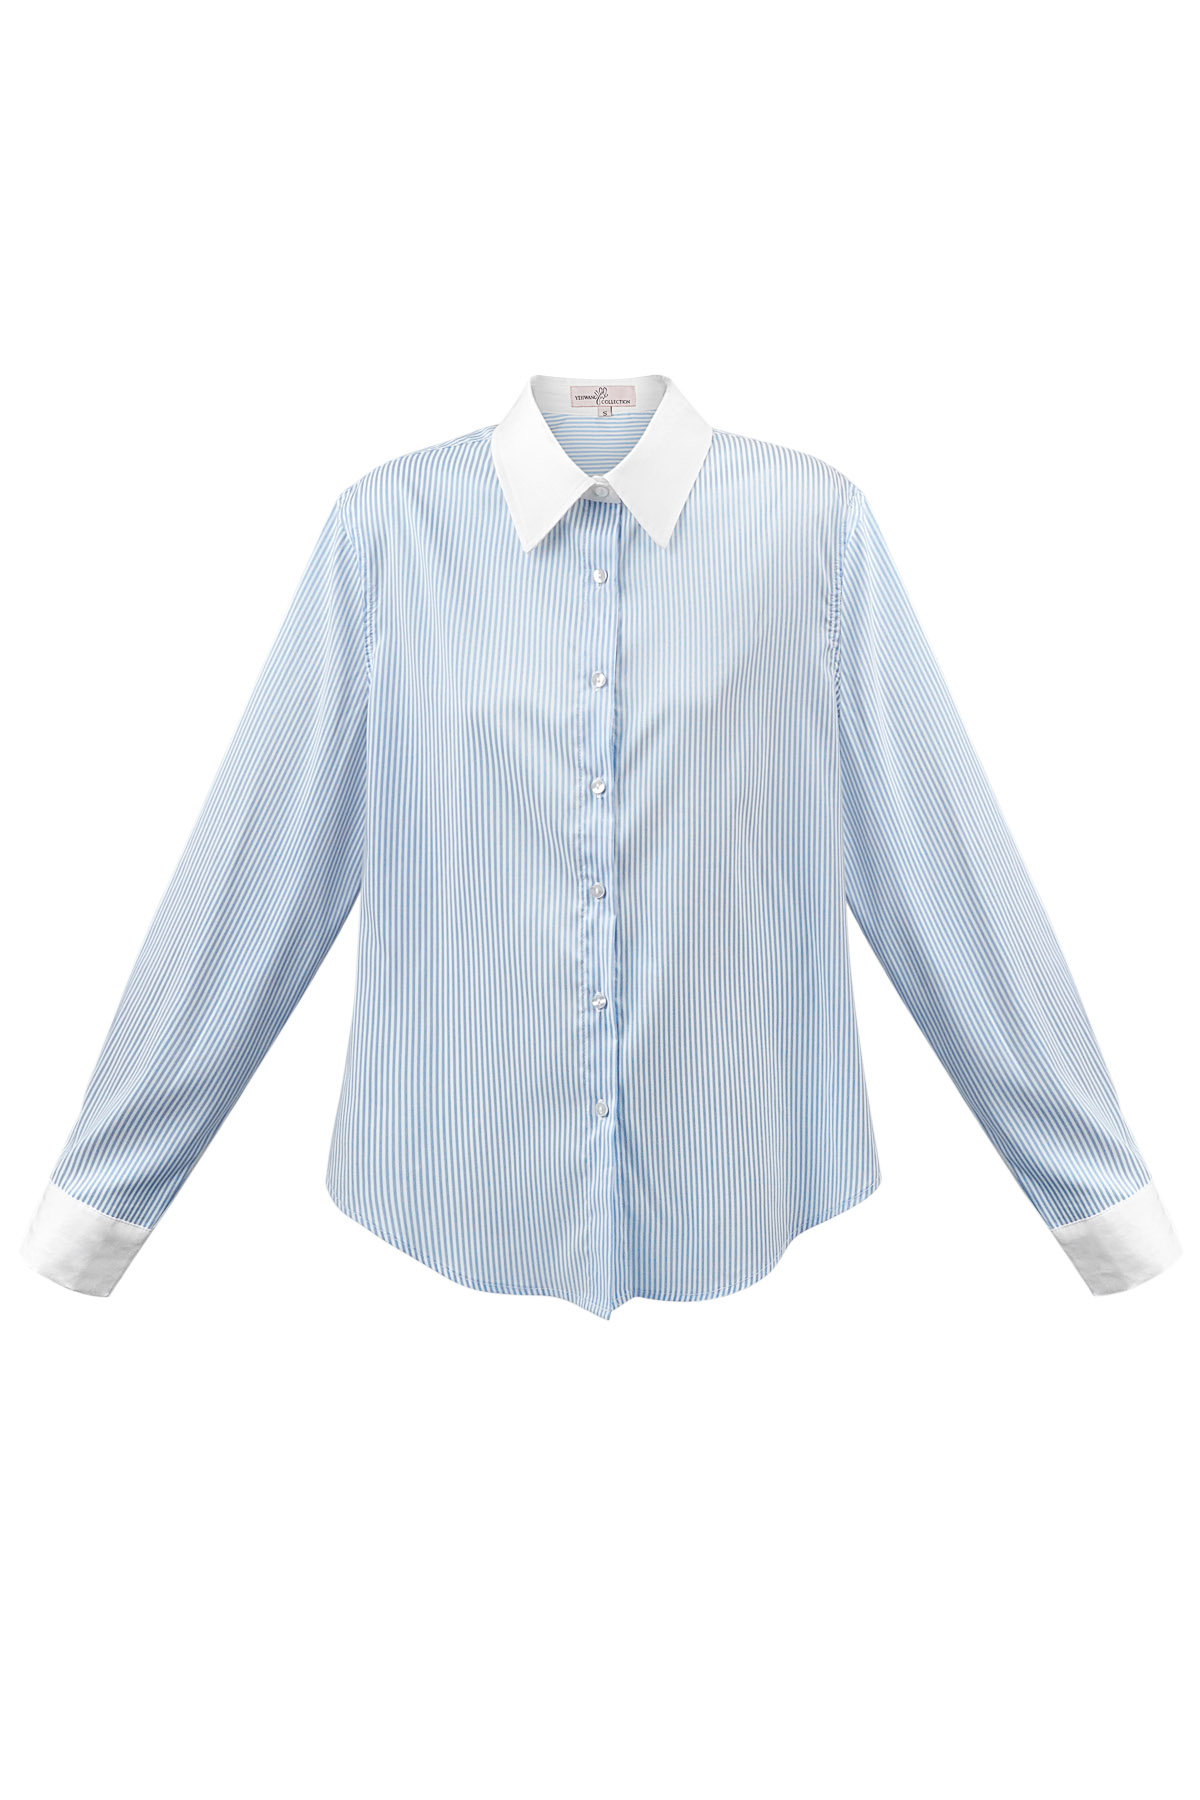 Blusa básica rayas - blanco/azul h5 